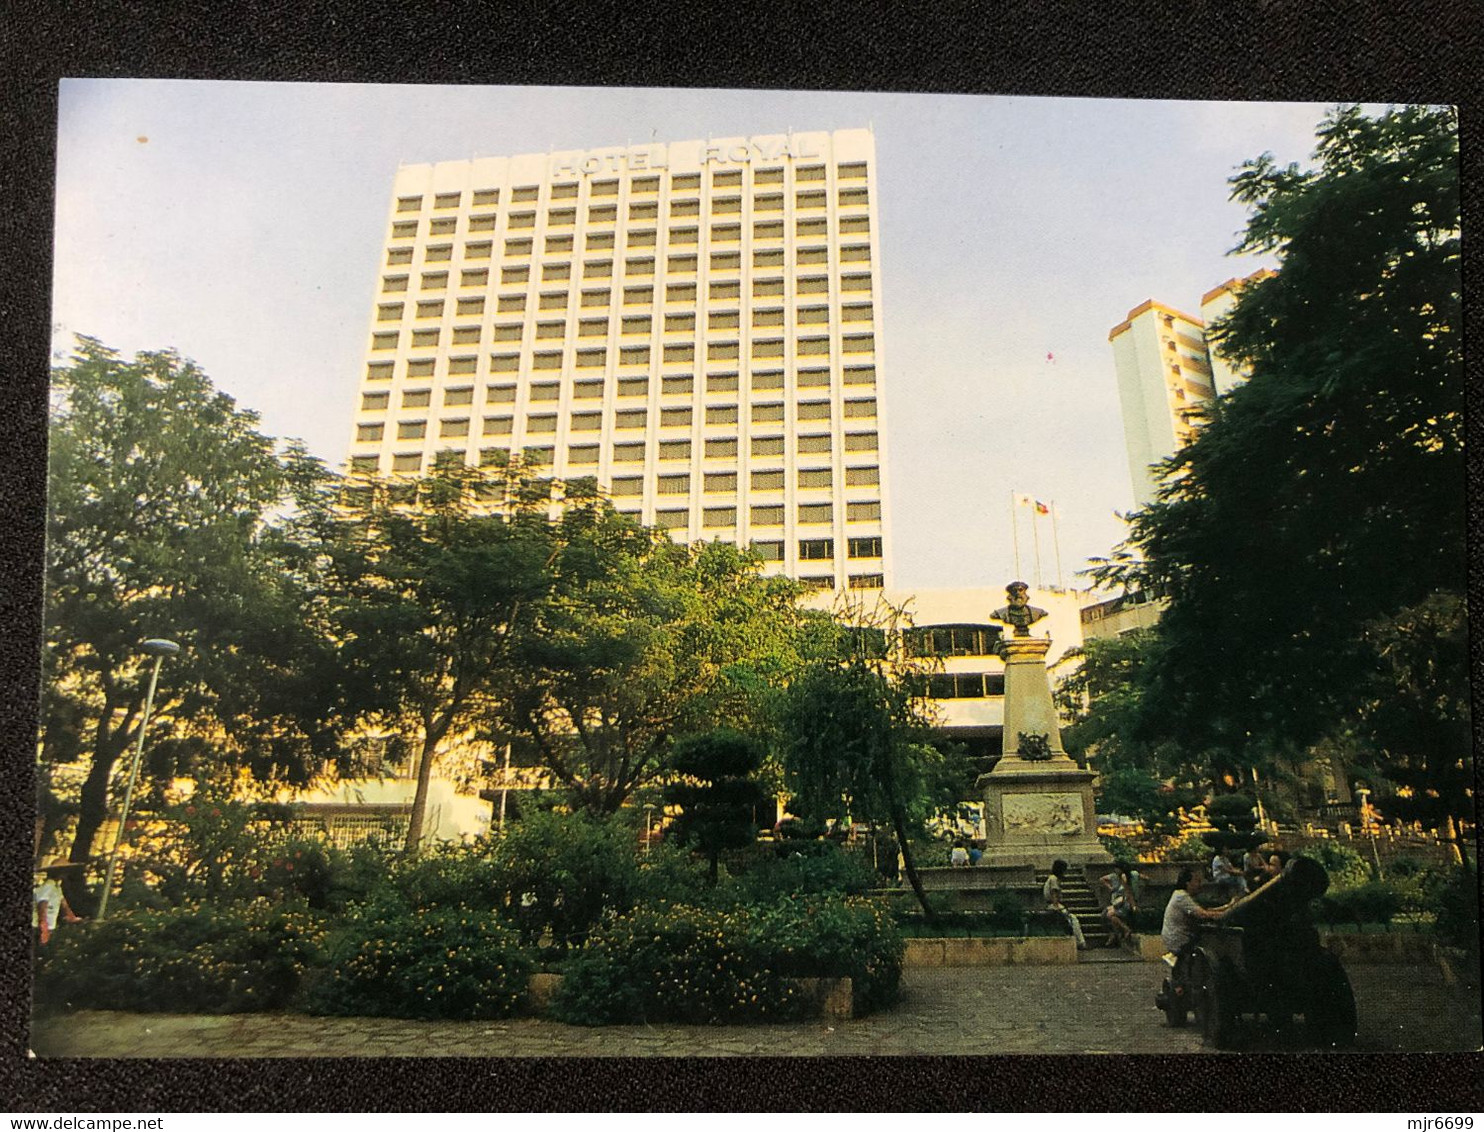 MACAU 60\70'S VASCO DA GAMA MONUMENT & HOTEL VIEW POST CARD. #203-B - Macau